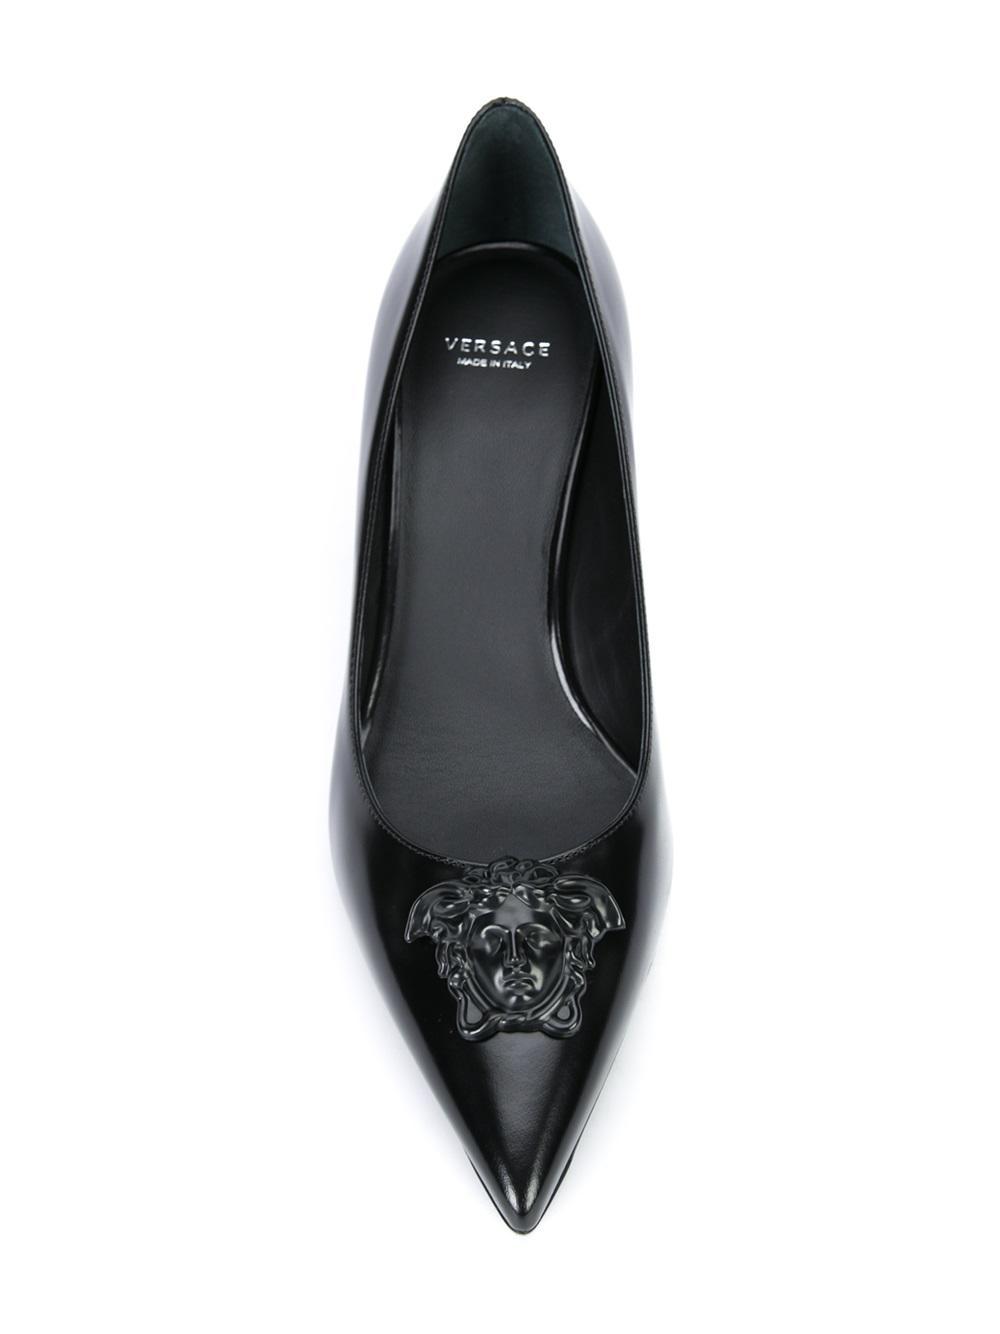 Versace Leather Palazzo Medusa Kitten Heel Pumps in Black - Lyst